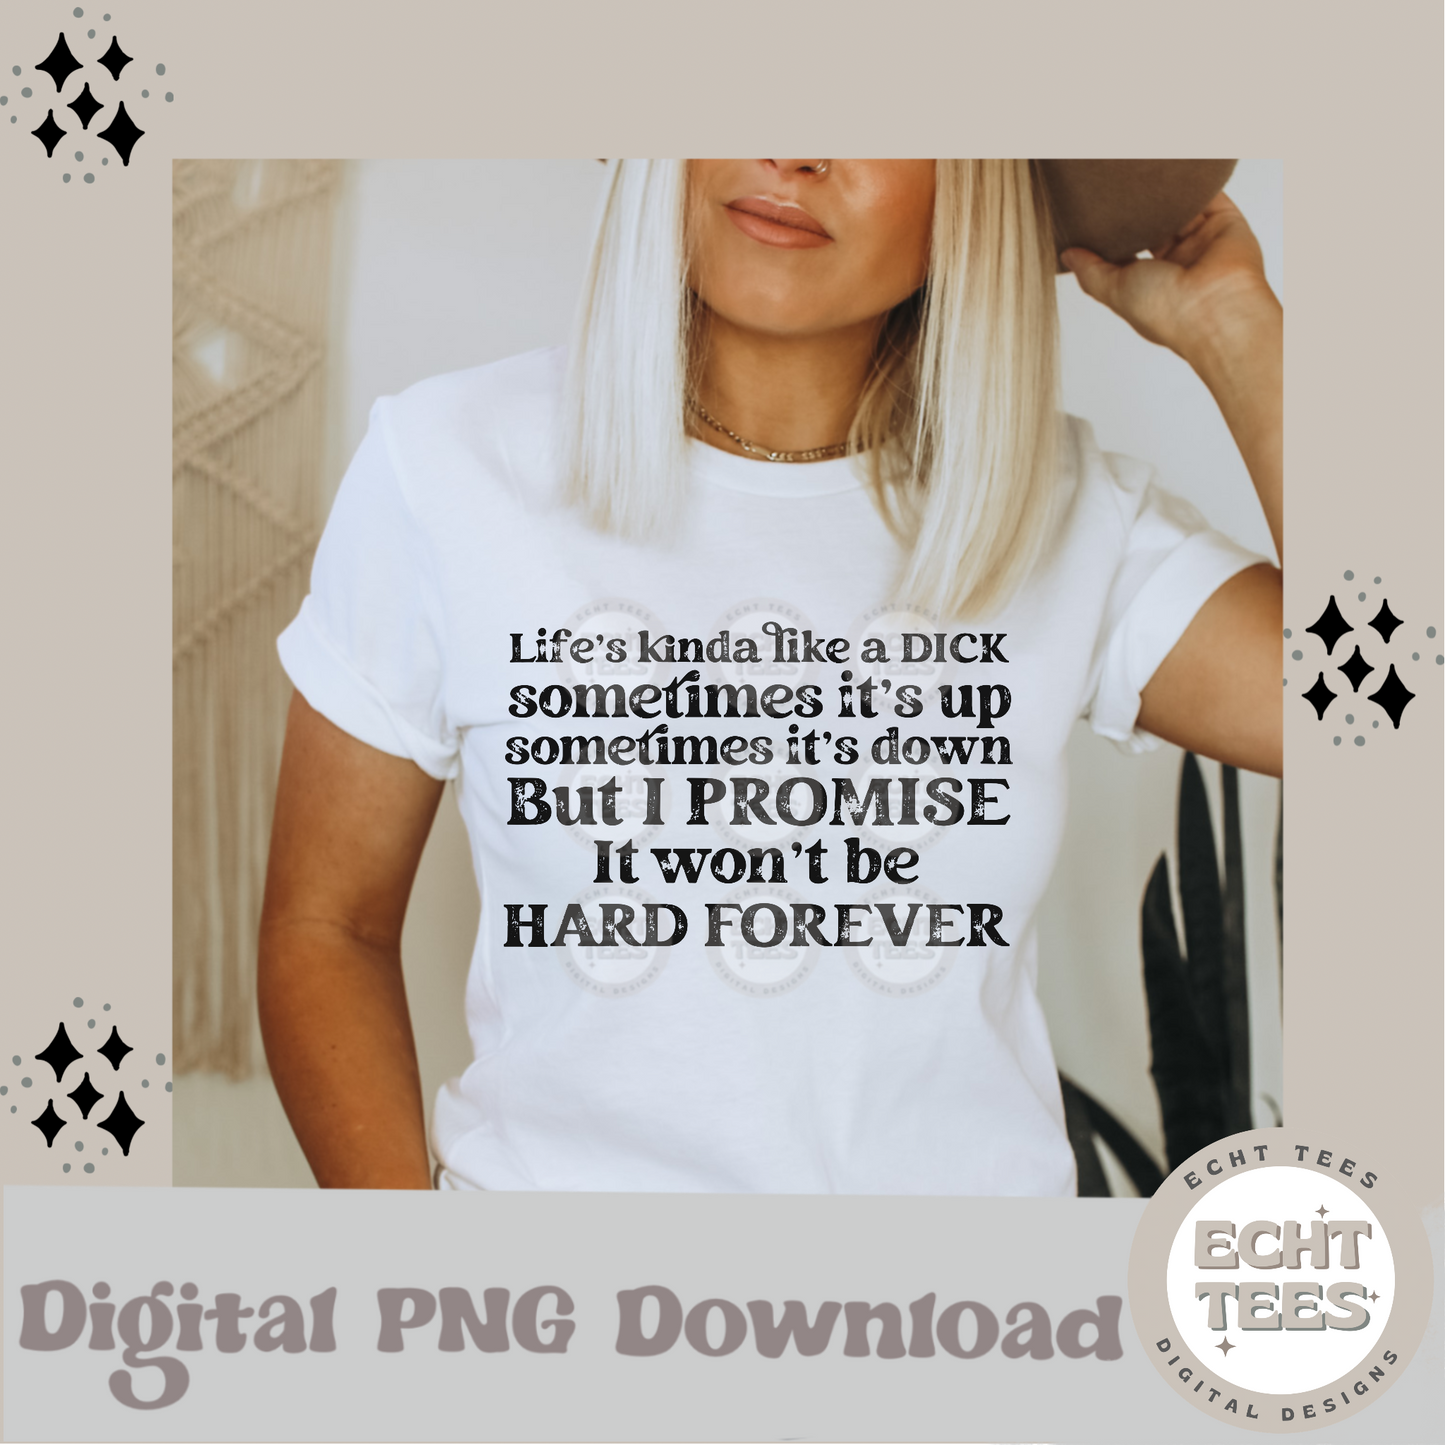 It won’t be hard forever PNG Digital Download